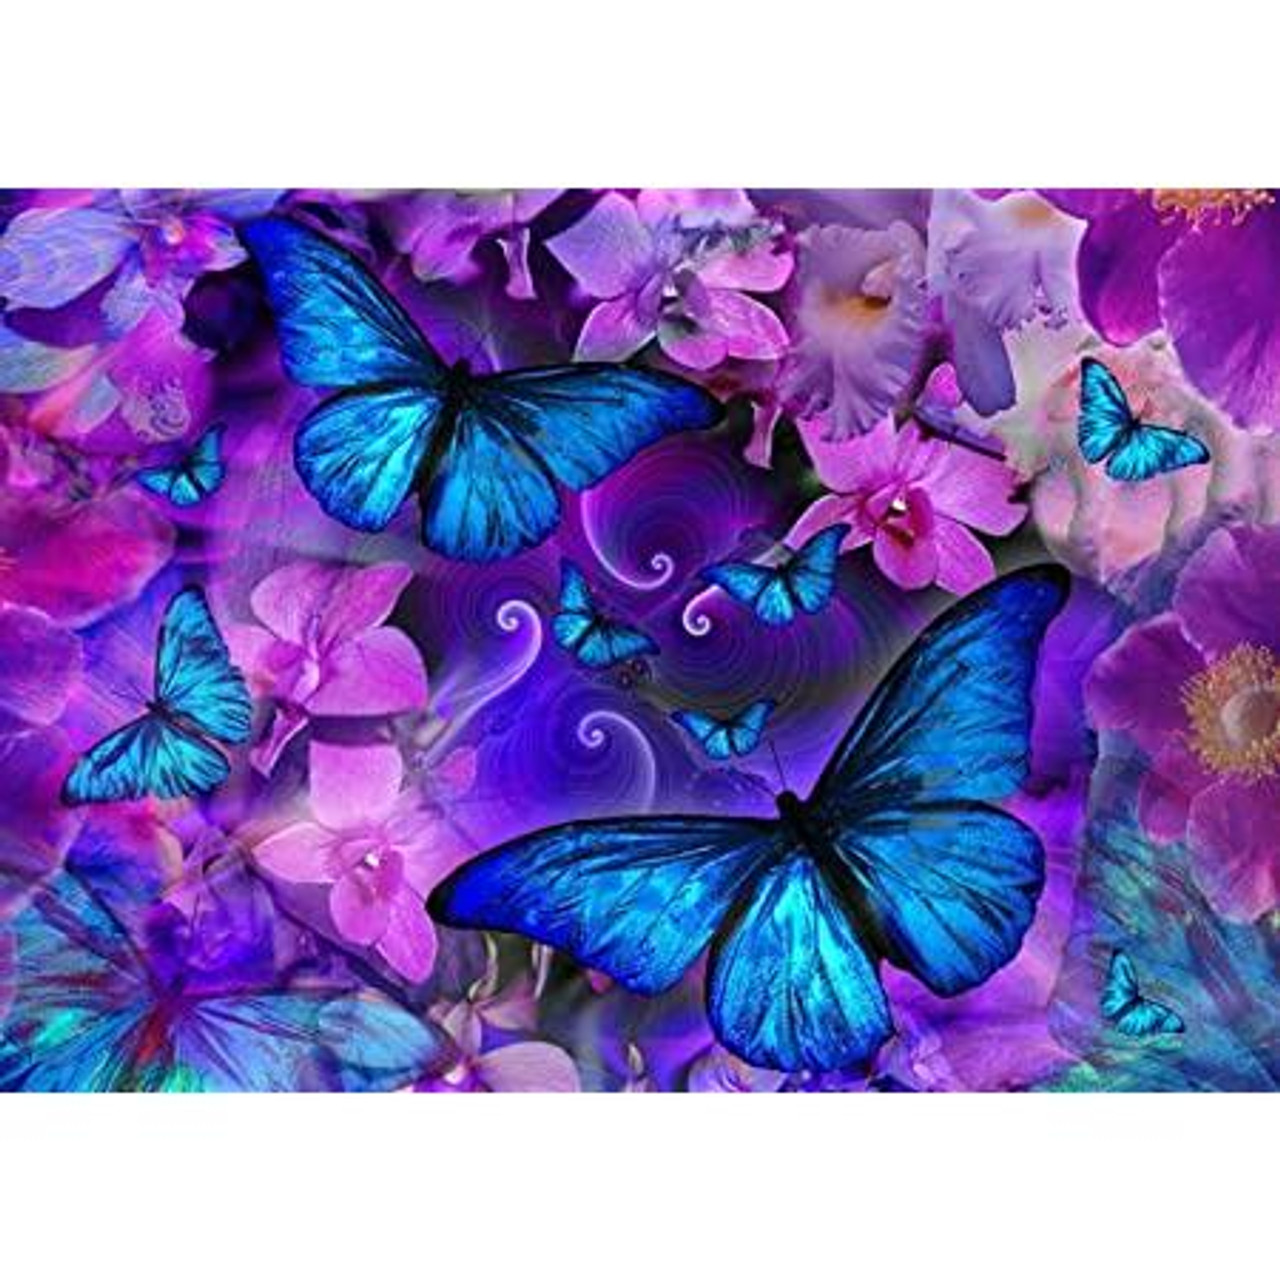 5D DIY My Diamond Art blue Butterfly Diamond Painting Kit NEW 